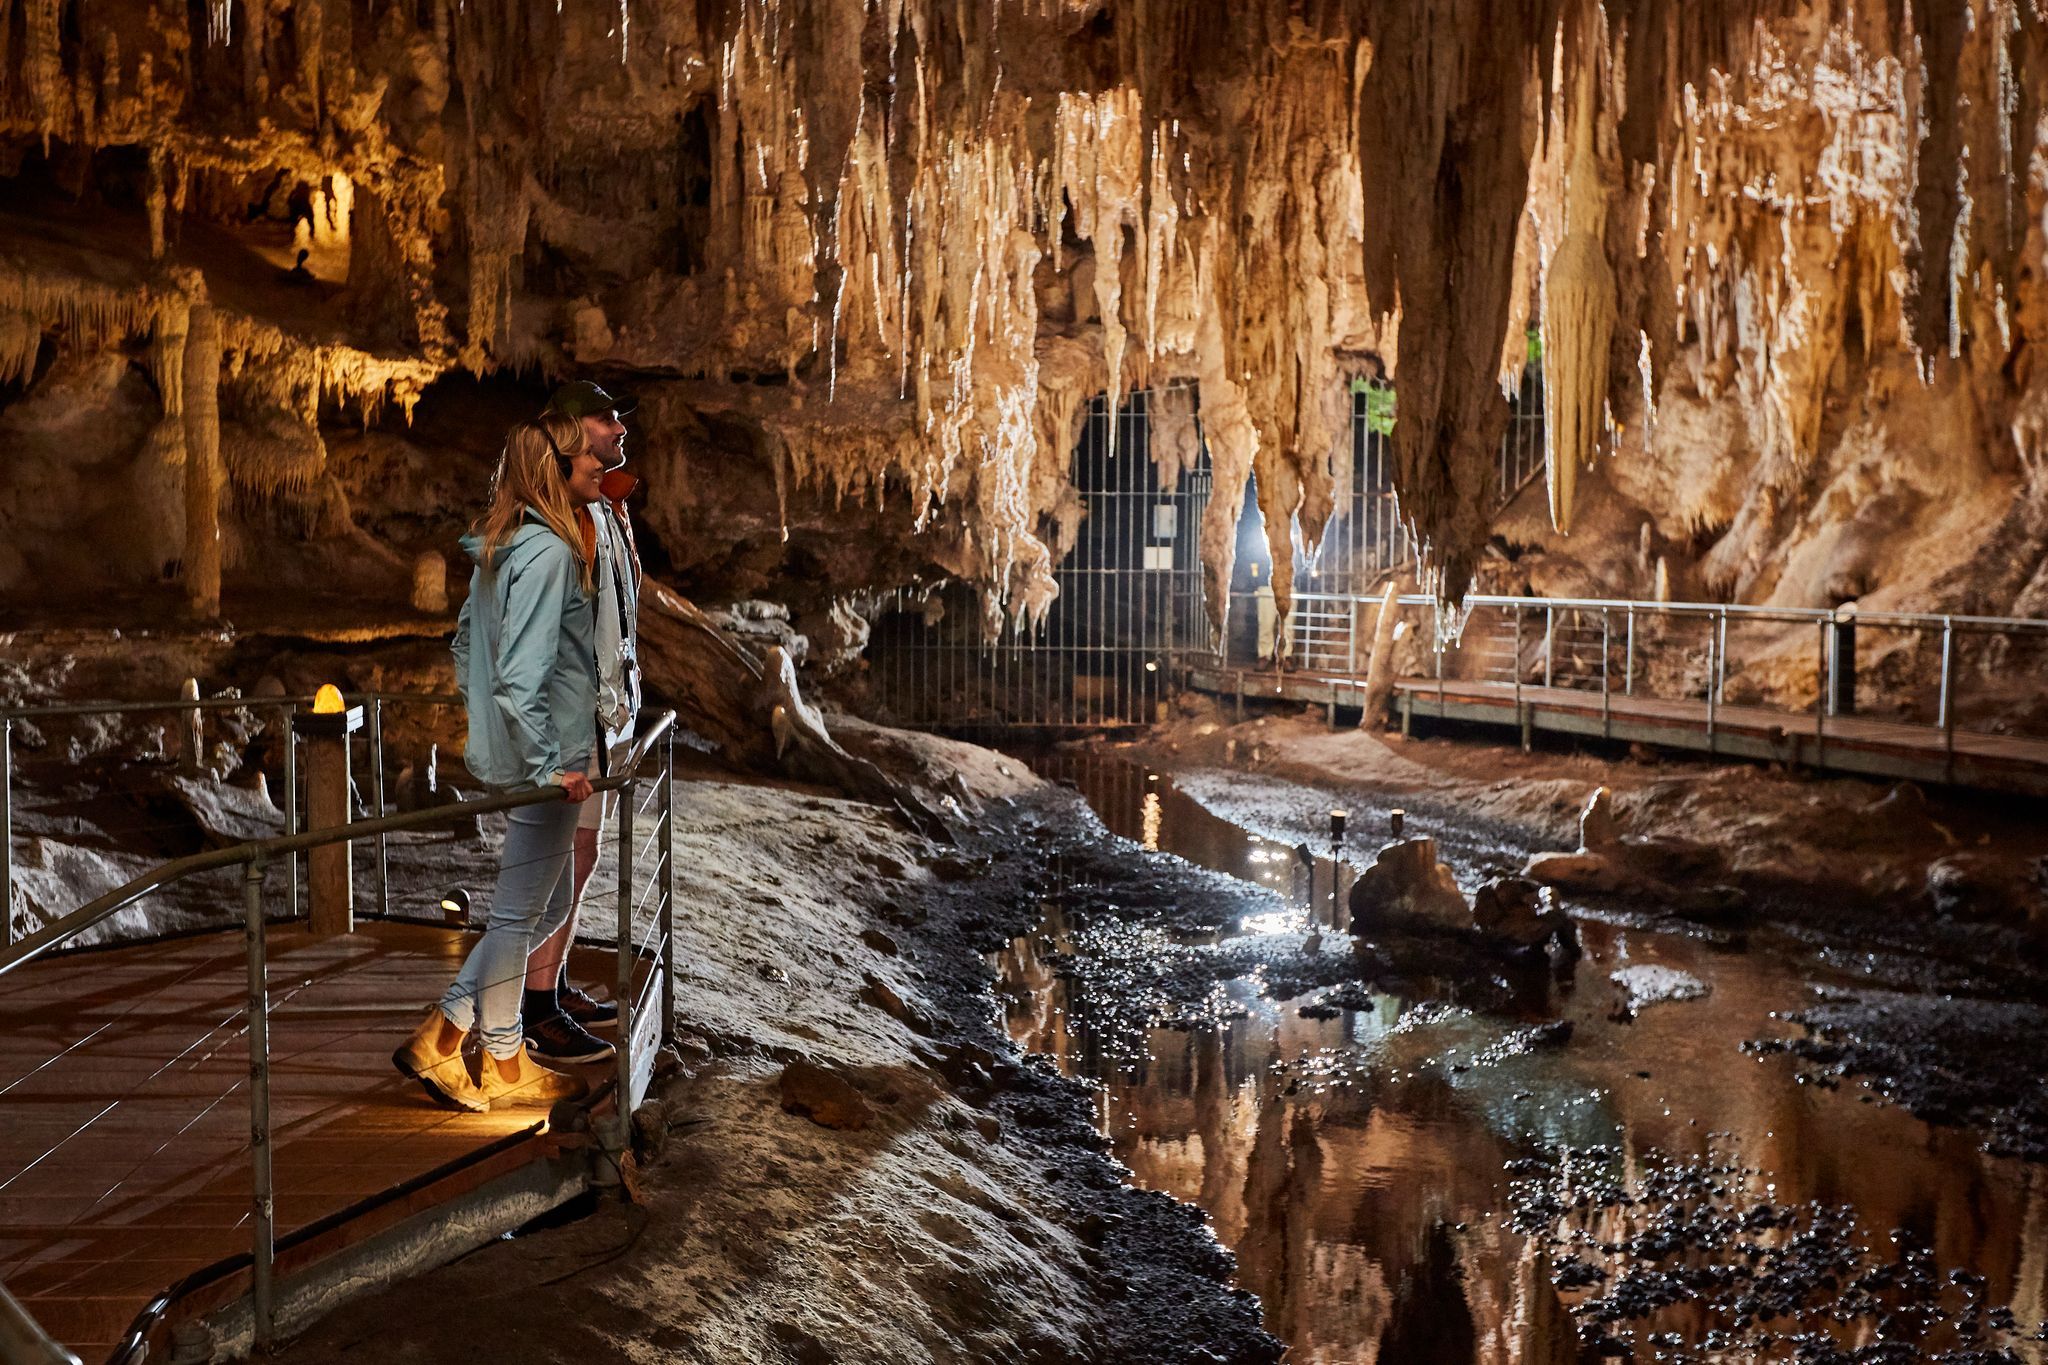 Inside Mamoth Cave, Credit Tim Campbell